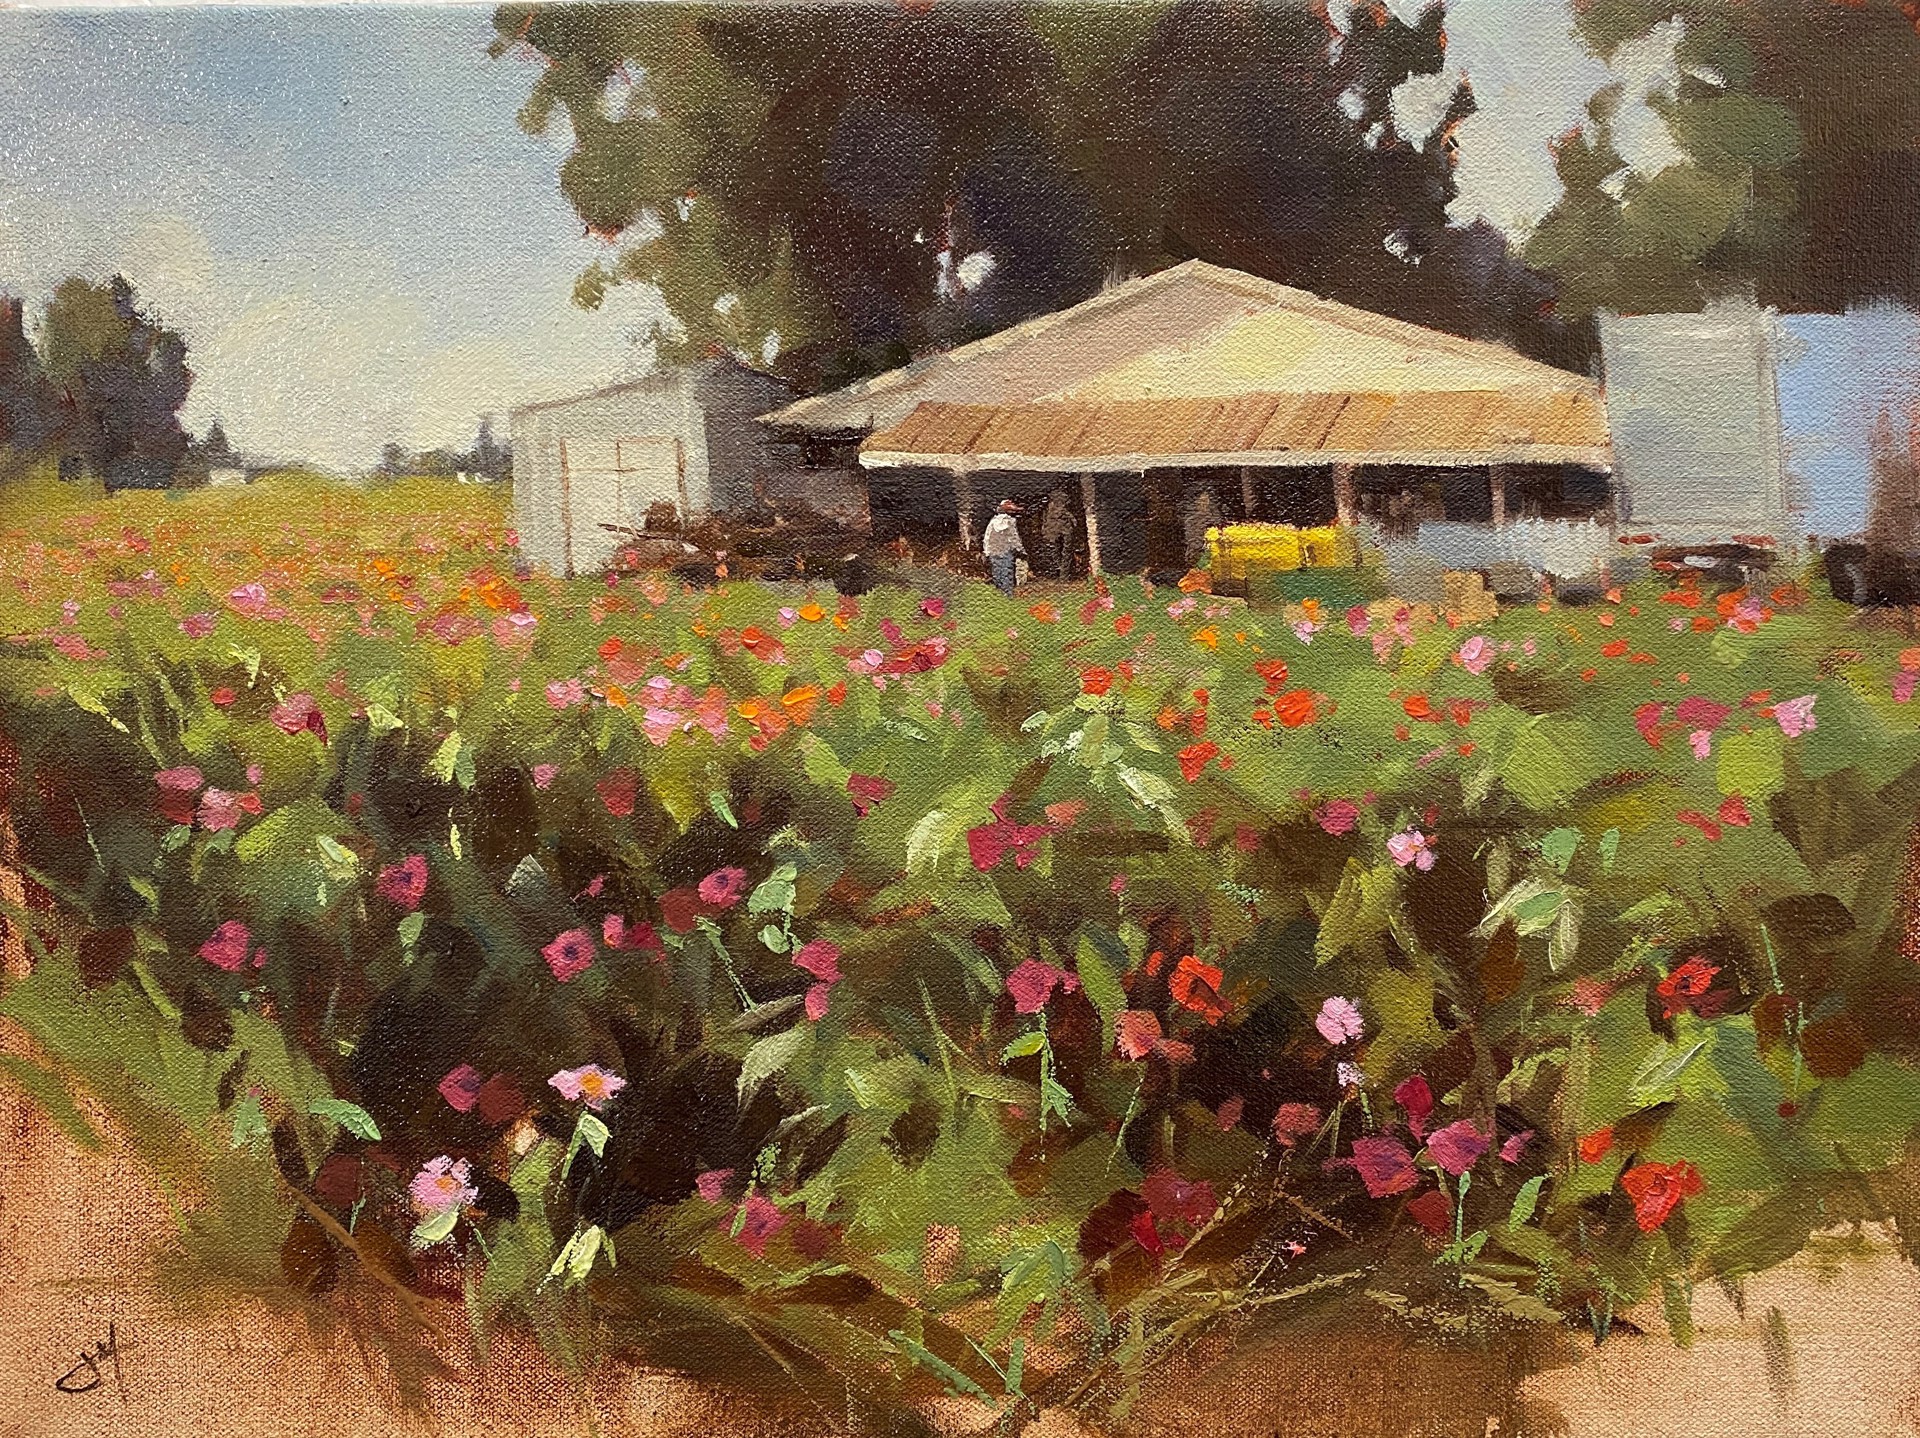 Flower Farm by Judd Mercer